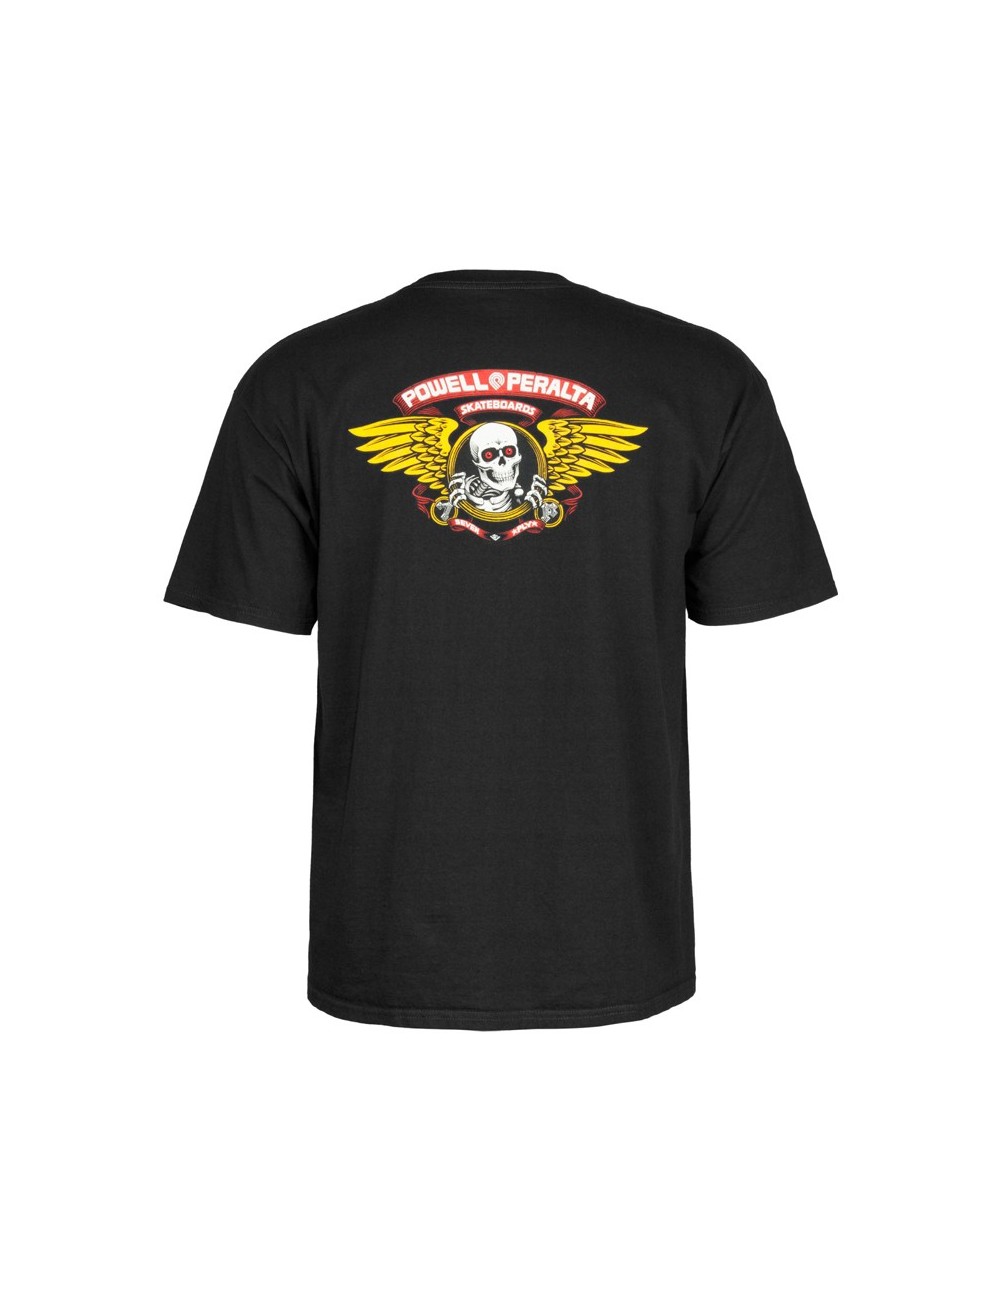 Powell Peralta Winged Ripper Black (Camiseta)